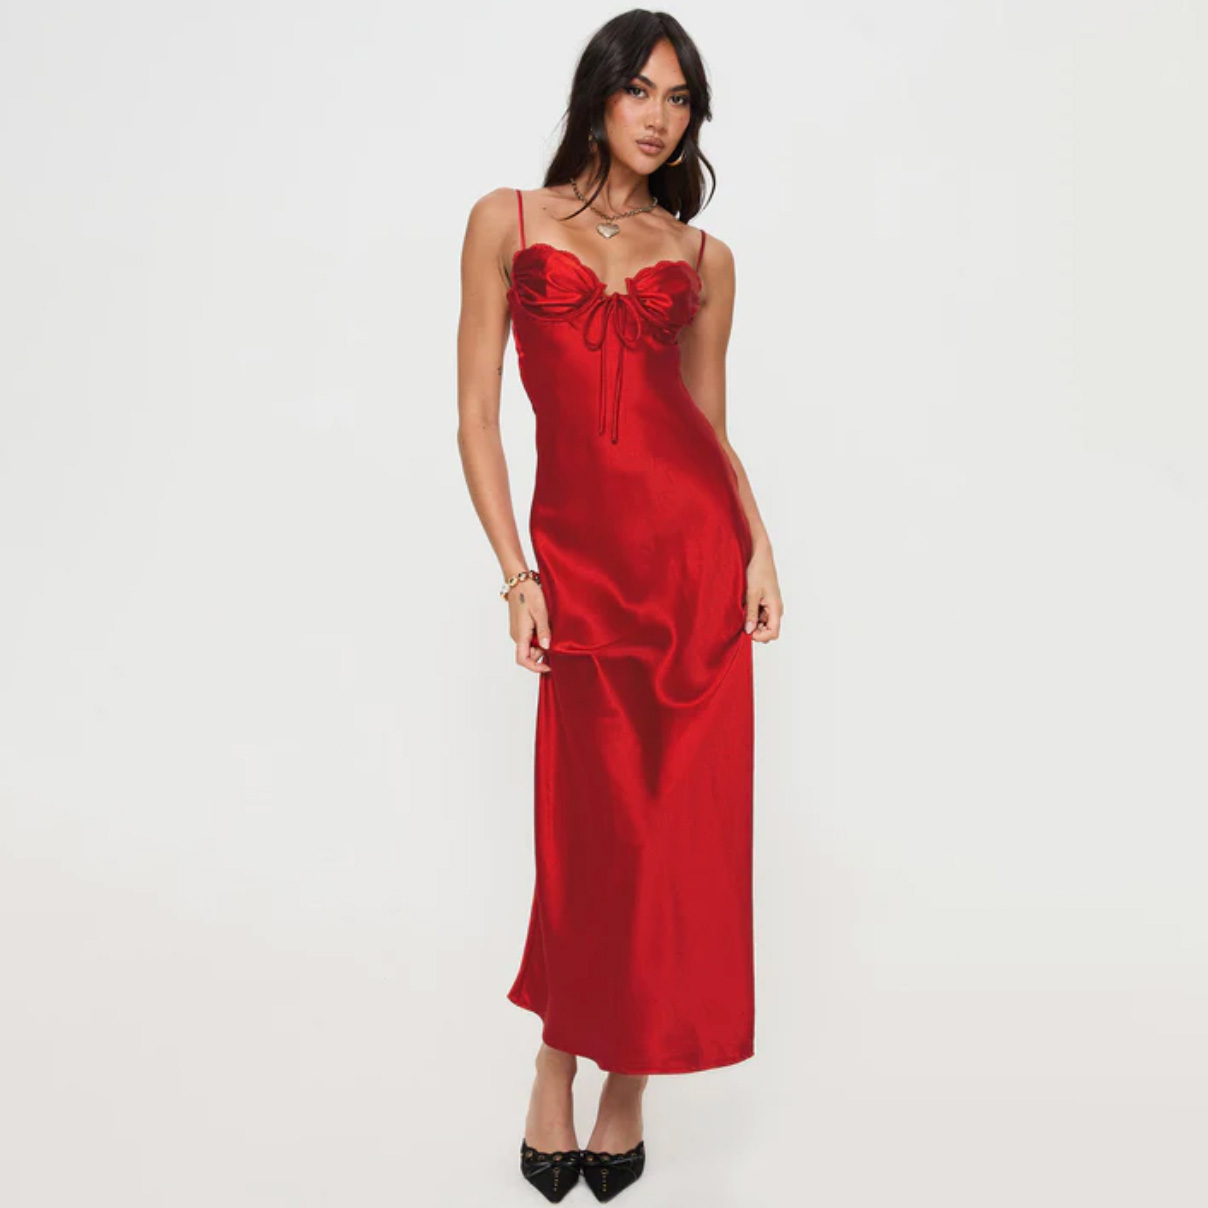 Woman wearing long red satin dress